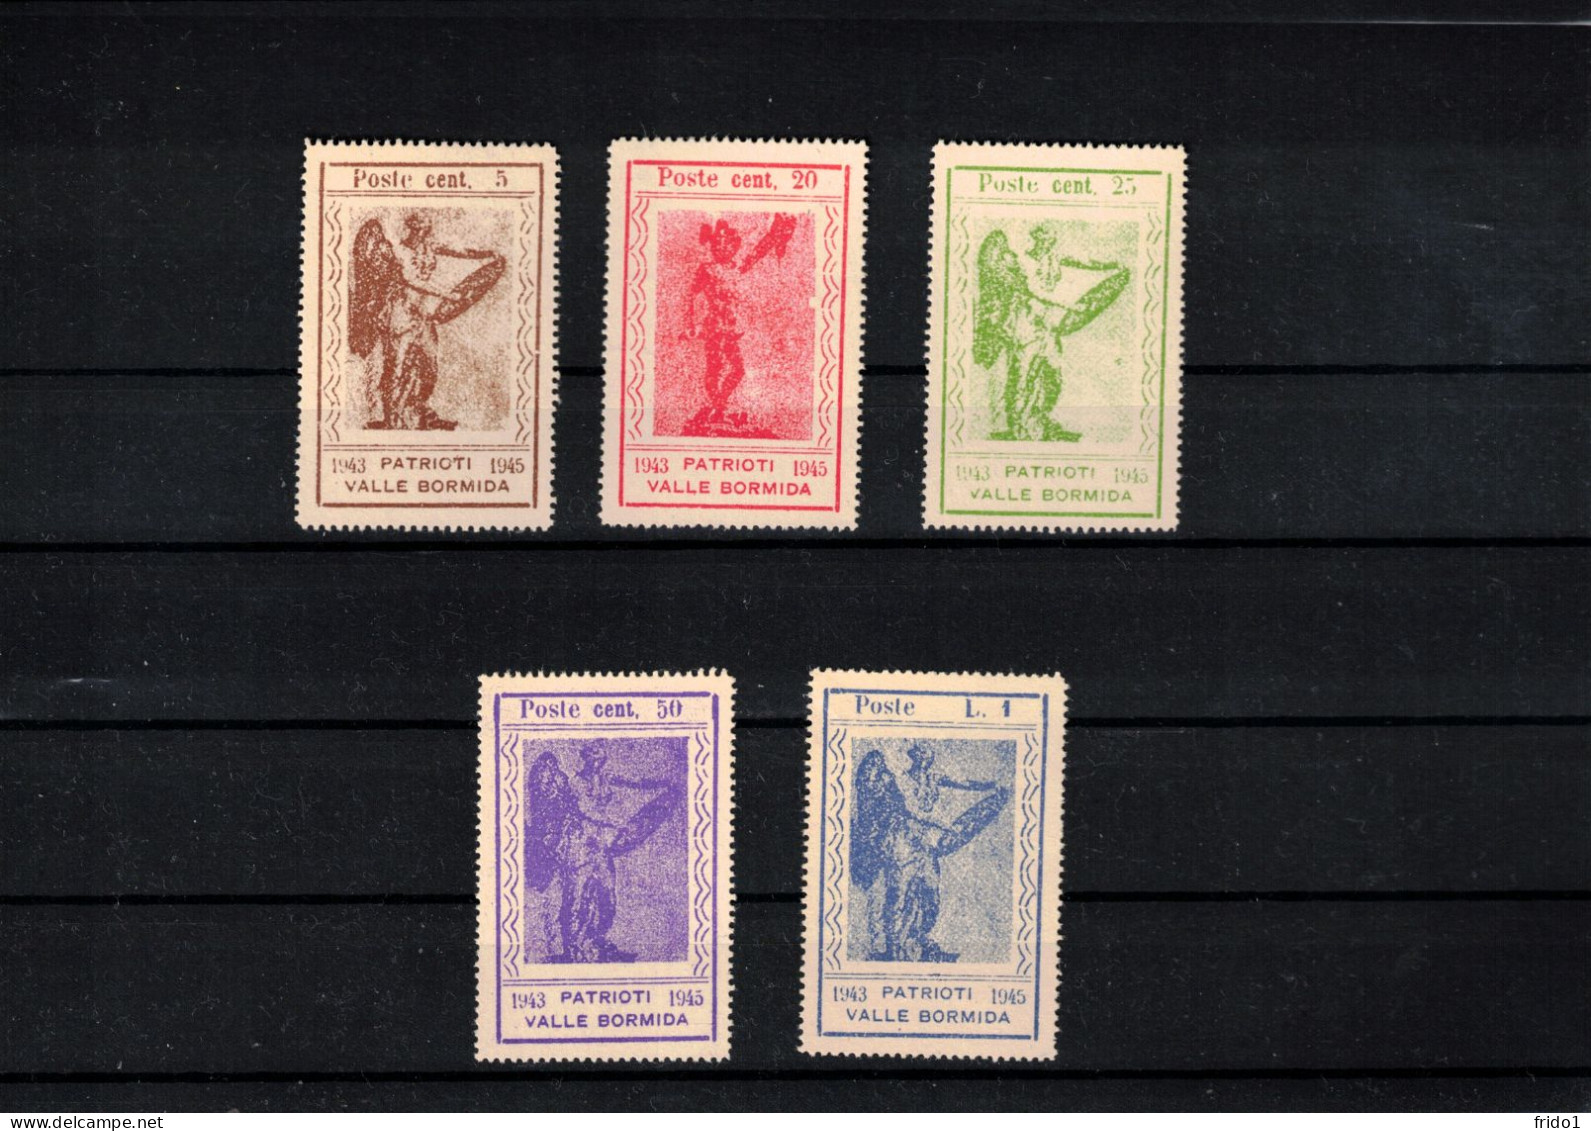 Italy / Italia 1945 Regno D'Italia Valle Bormida Part Of Set Stamps Without Gum As Issued - Ungebraucht